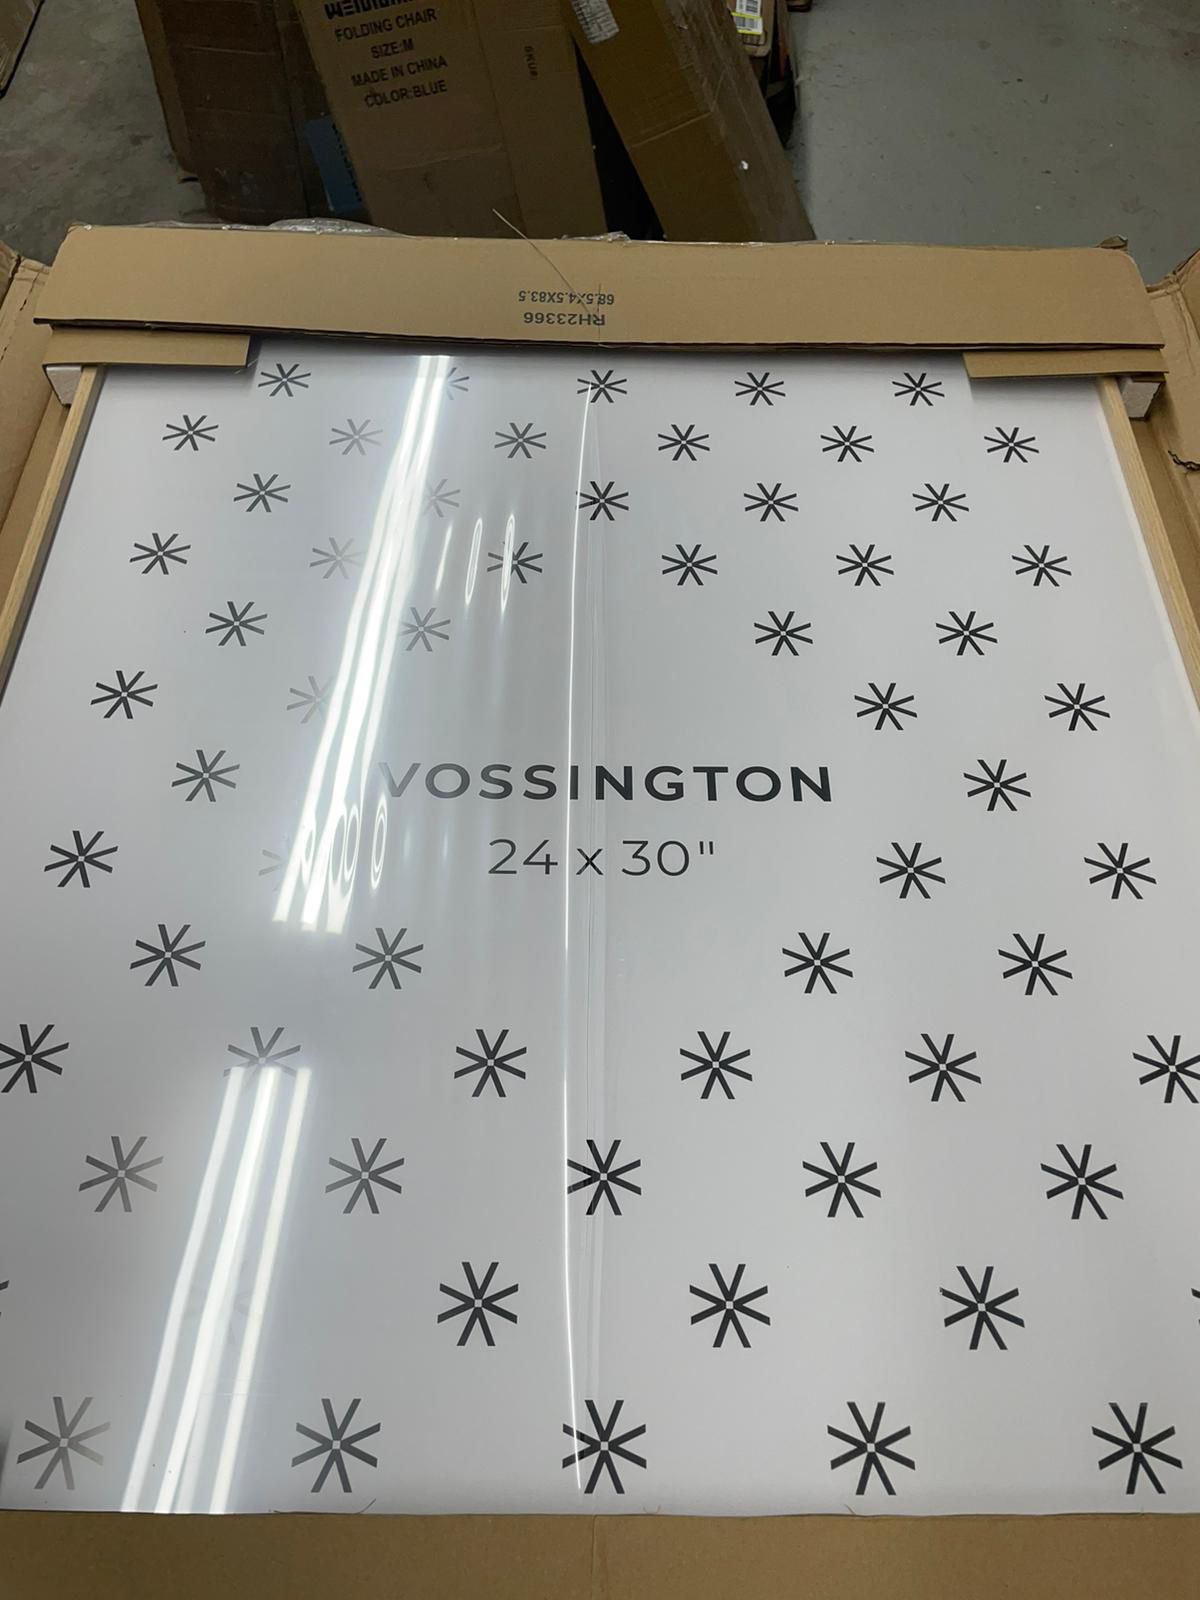 Vossington Thin 24x30 Poster Frame - Light Oak Frame Color (Real Wood Grain Finish) - Slim & Modern Frame Design - Fits 1 Picture, Art Print, Puzzle